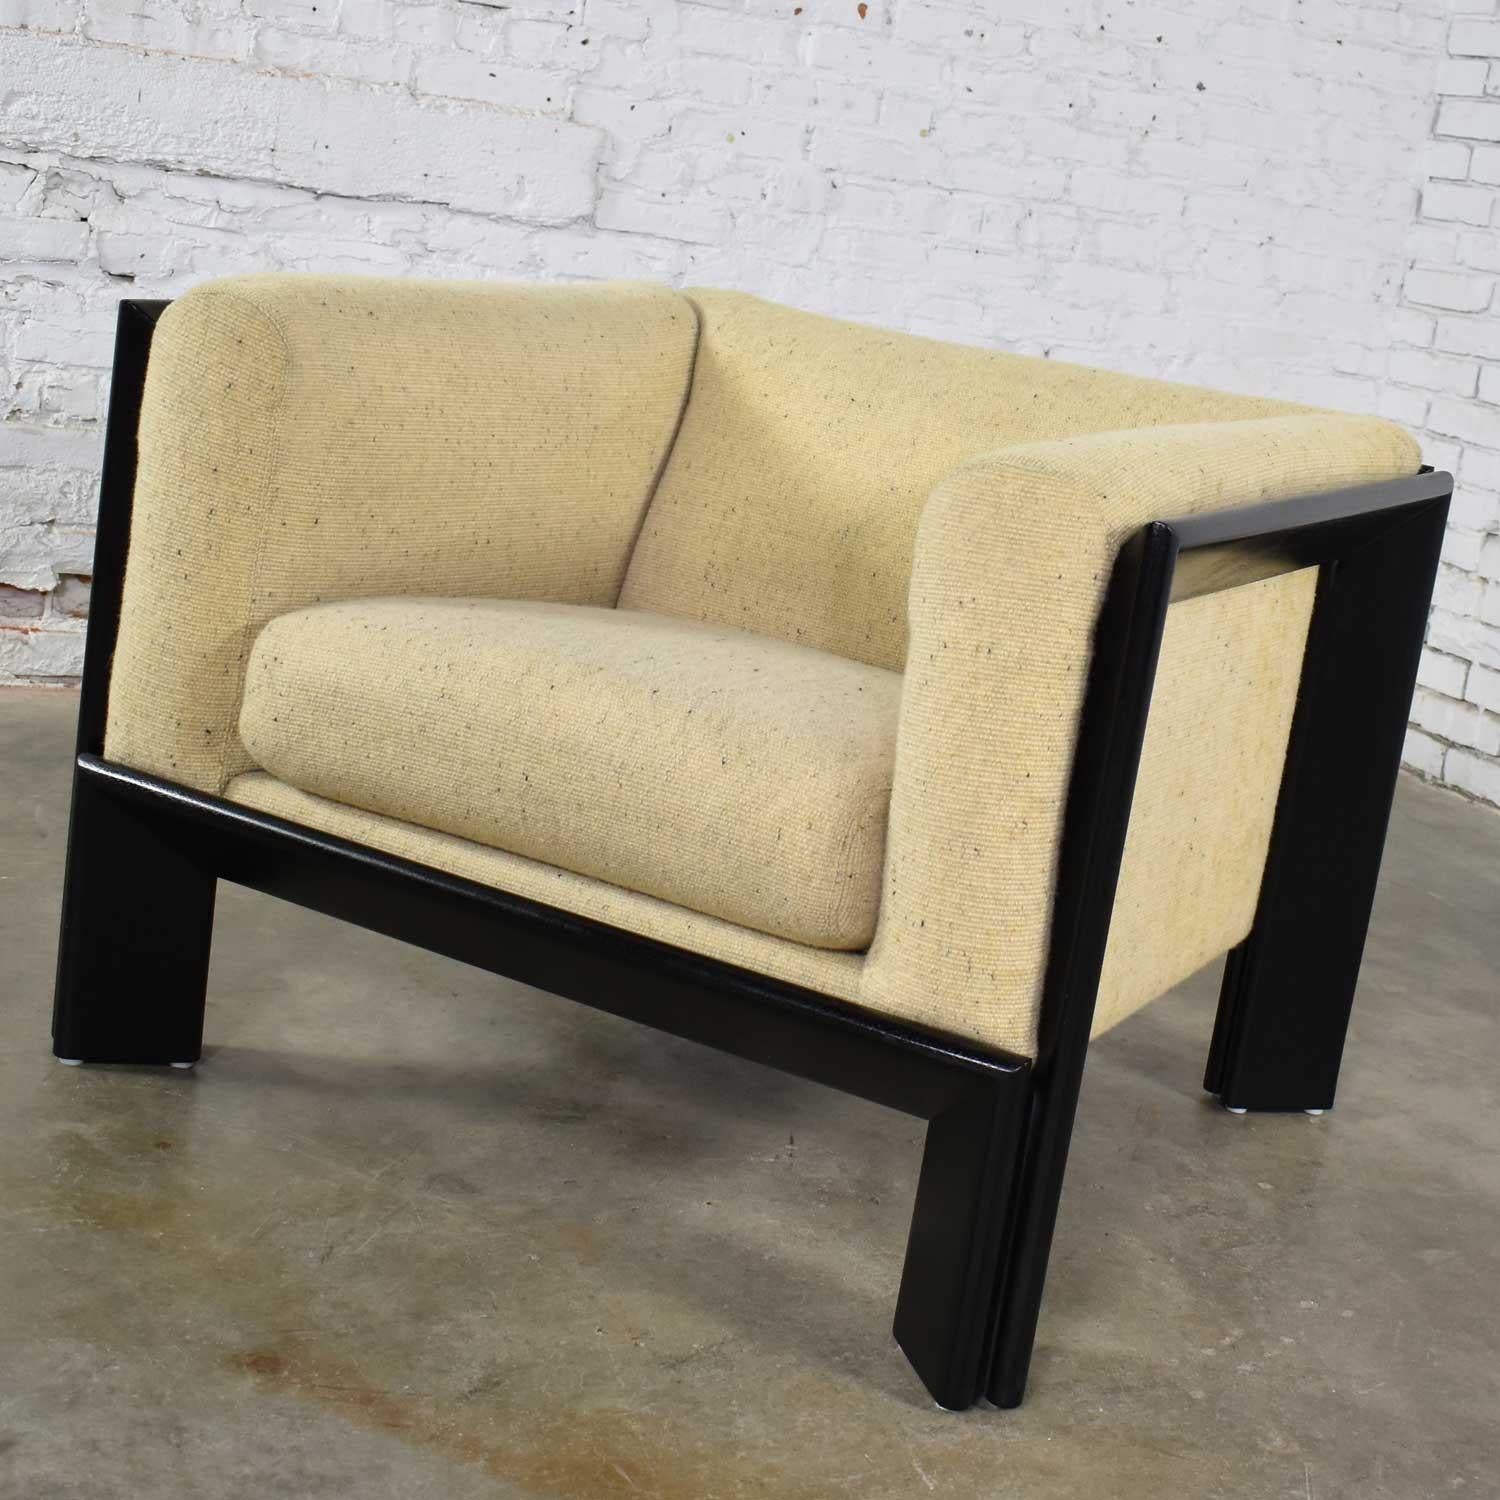 American Modern Black and White Cube Club Lounge Chair Metropolitan Furniture Co.